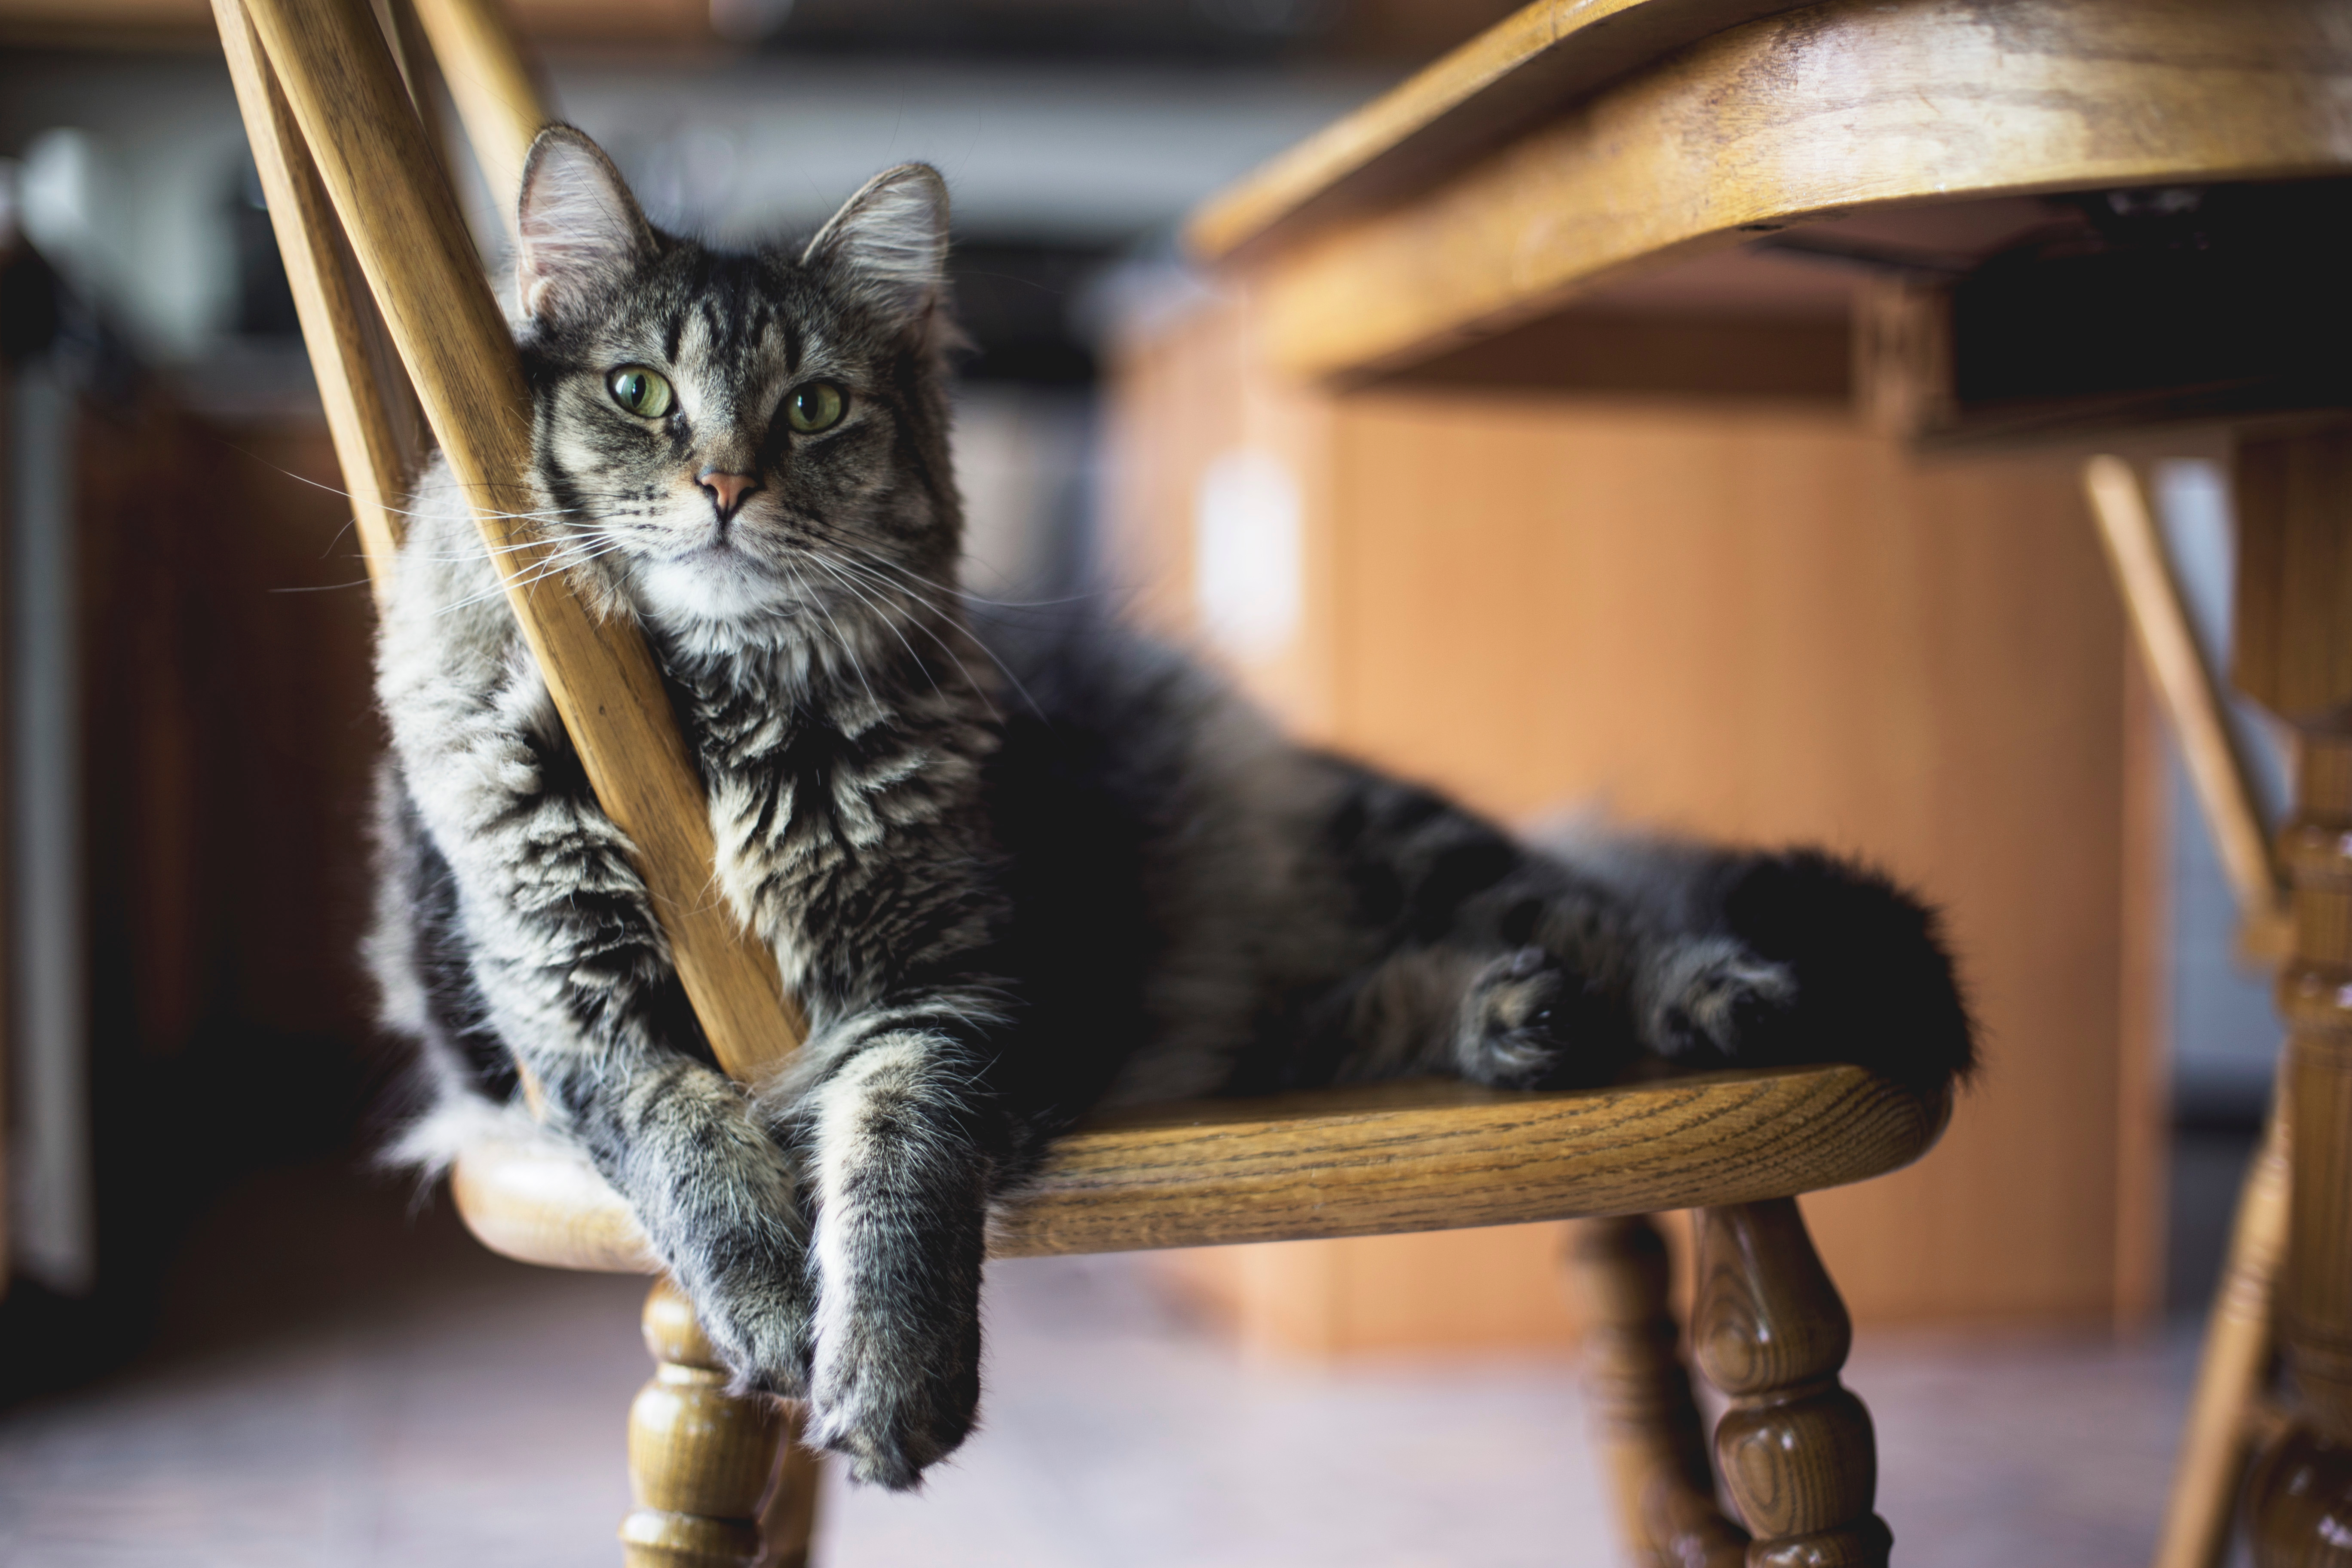 Cat sitting on kitchen chair